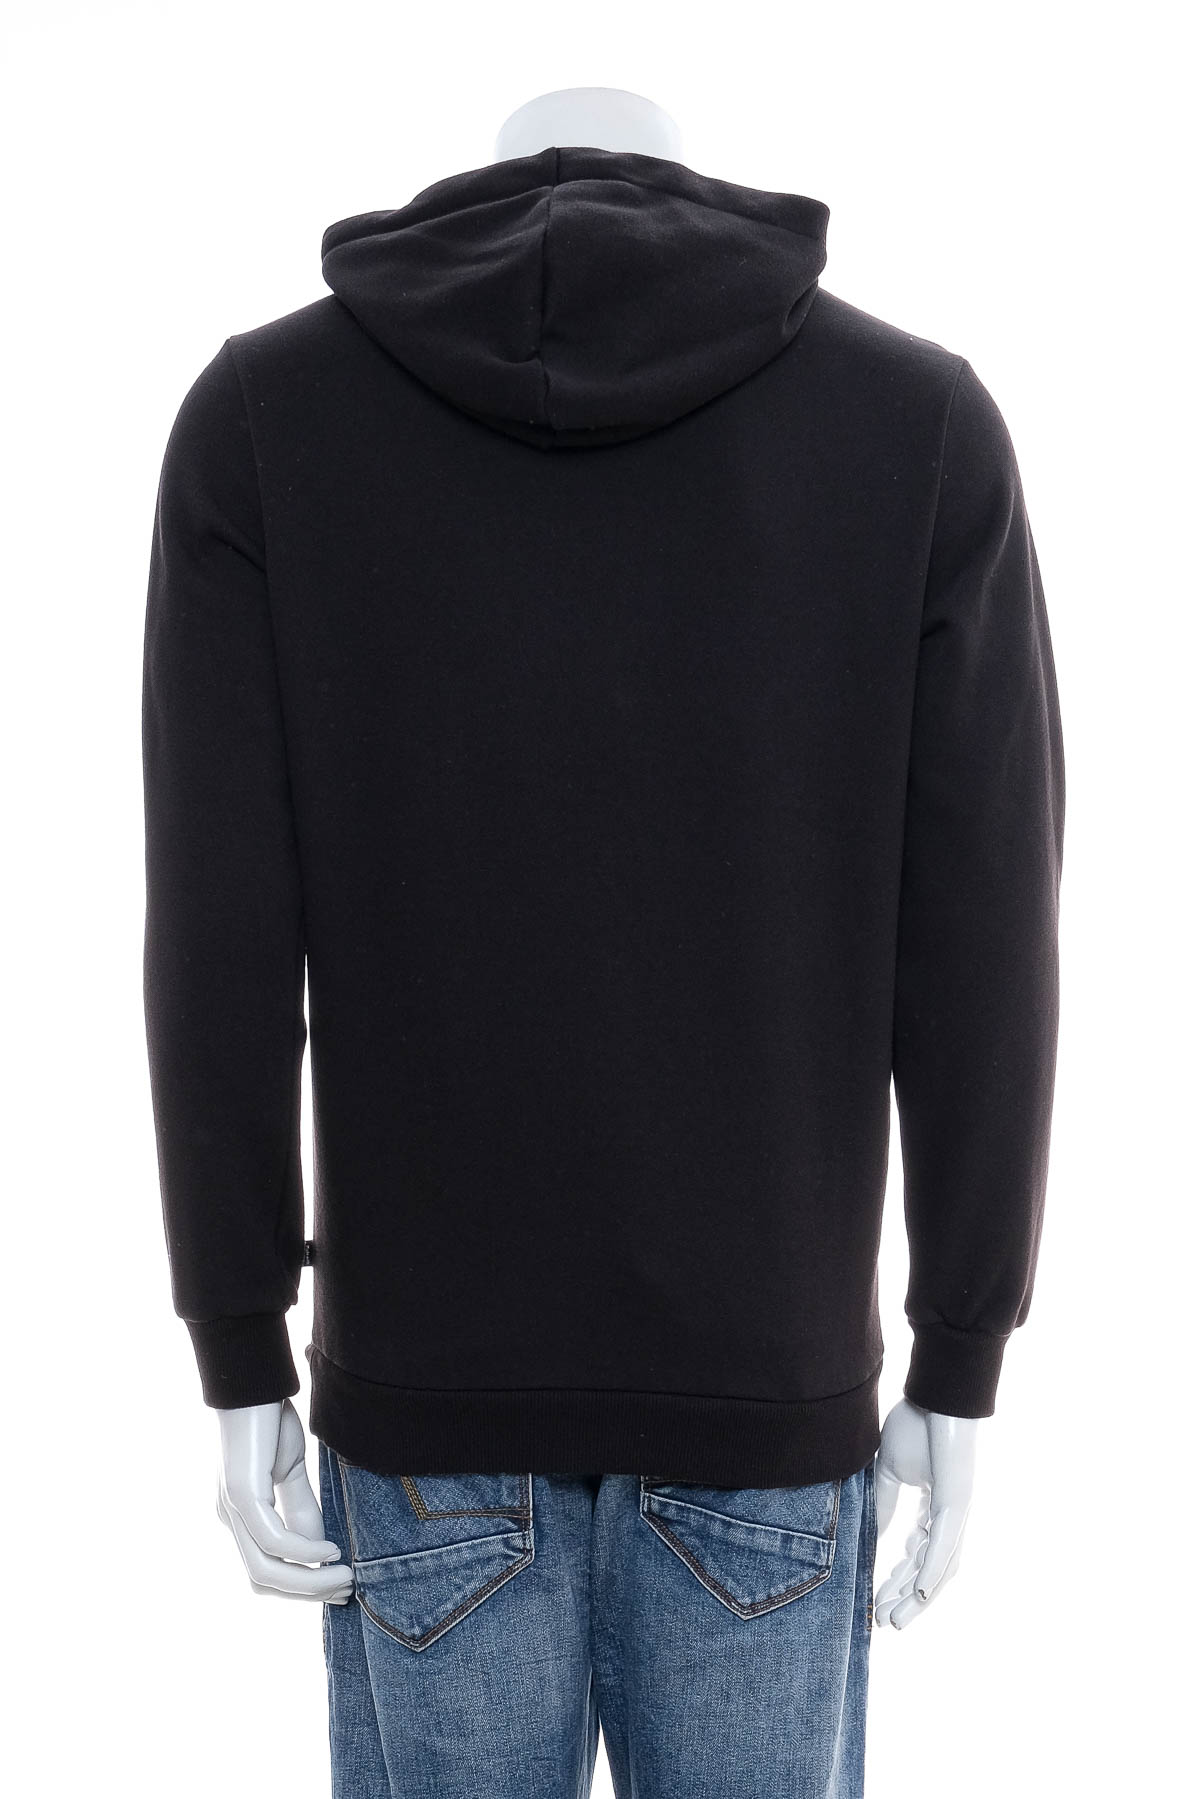 Men's sweatshirt - PUMA - 1